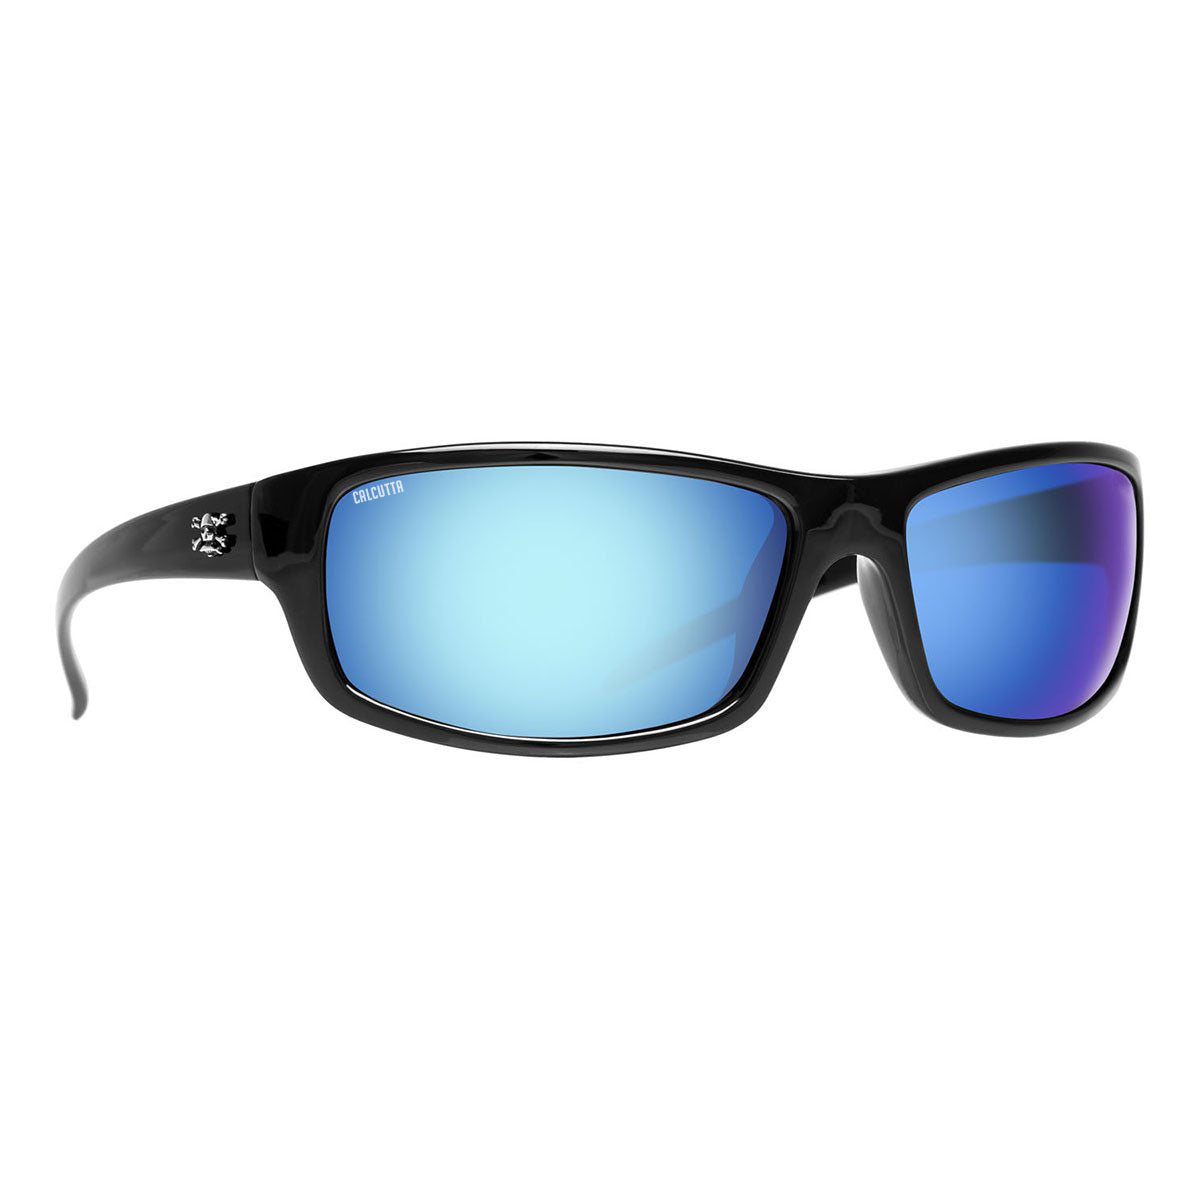 Fishing Sunglasses, Polarized Lenses